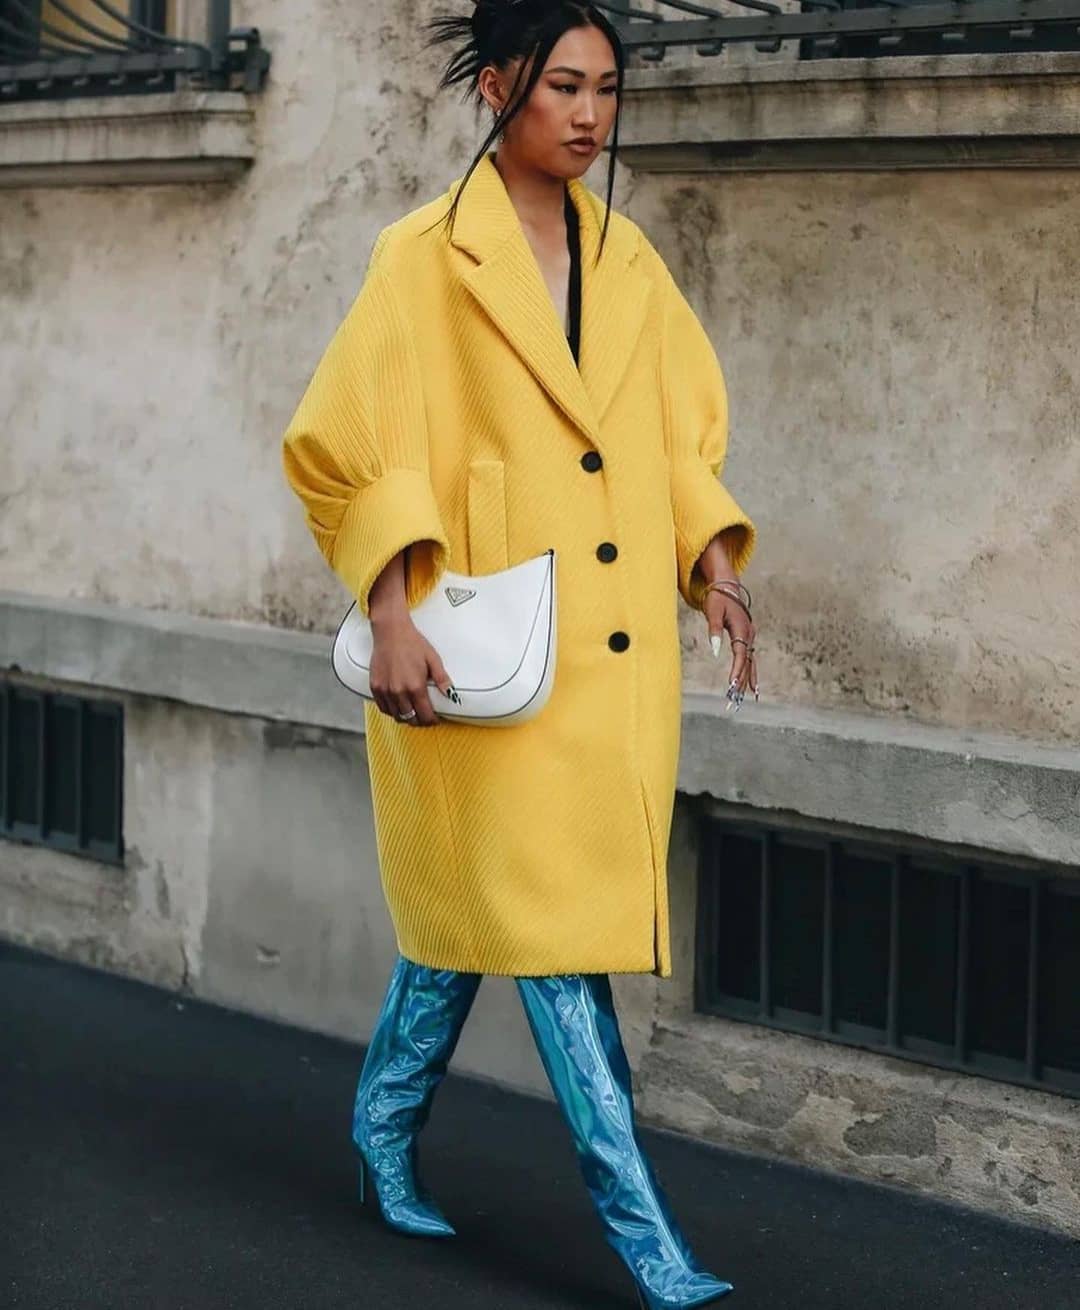 September street style roundup at fashion week | Melody Jacob